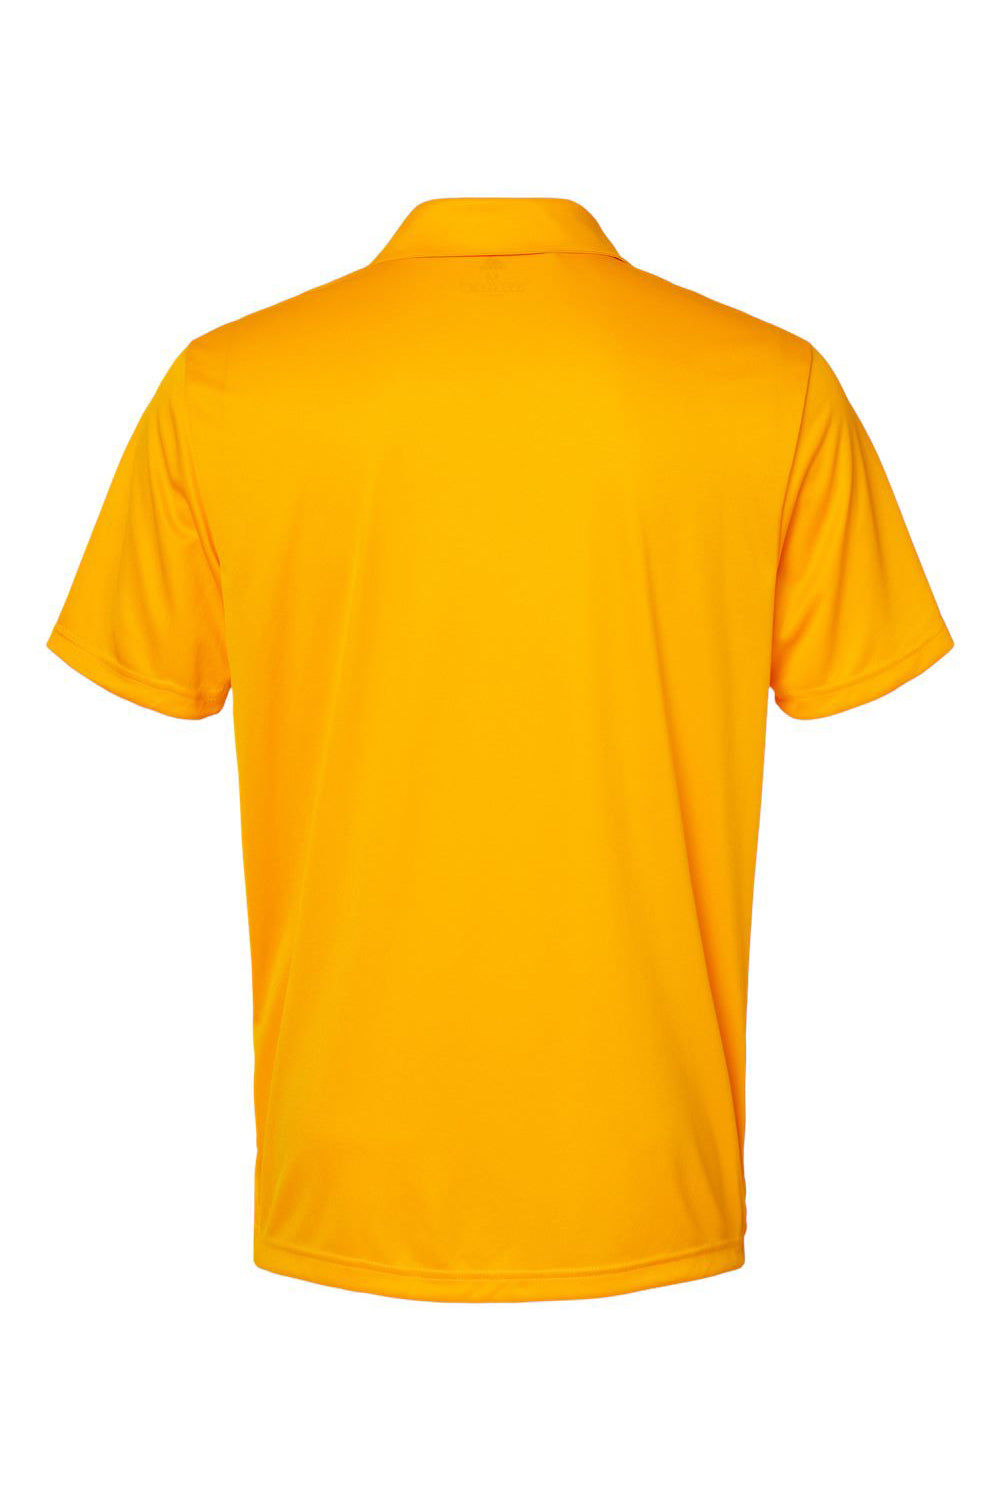 Adidas A324 Mens 3 Stripes UPF 50+ Short Sleeve Polo Shirt Team Collegiate Gold/Black Flat Back